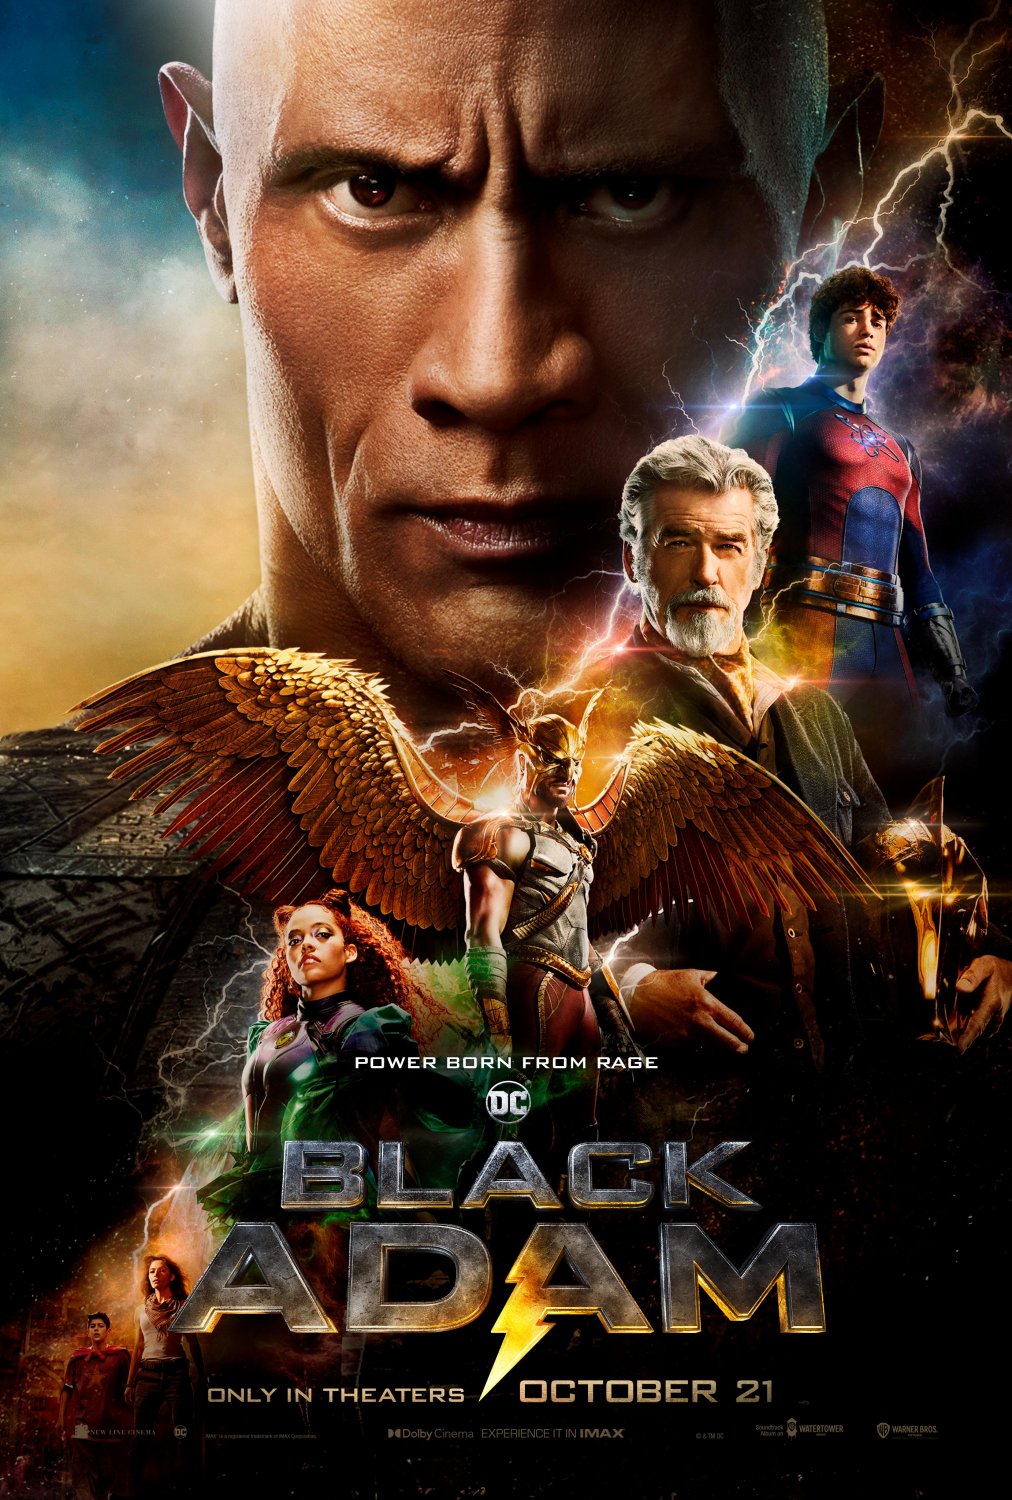 Black Adam DVD 2022 Movie Dwayne Johnson